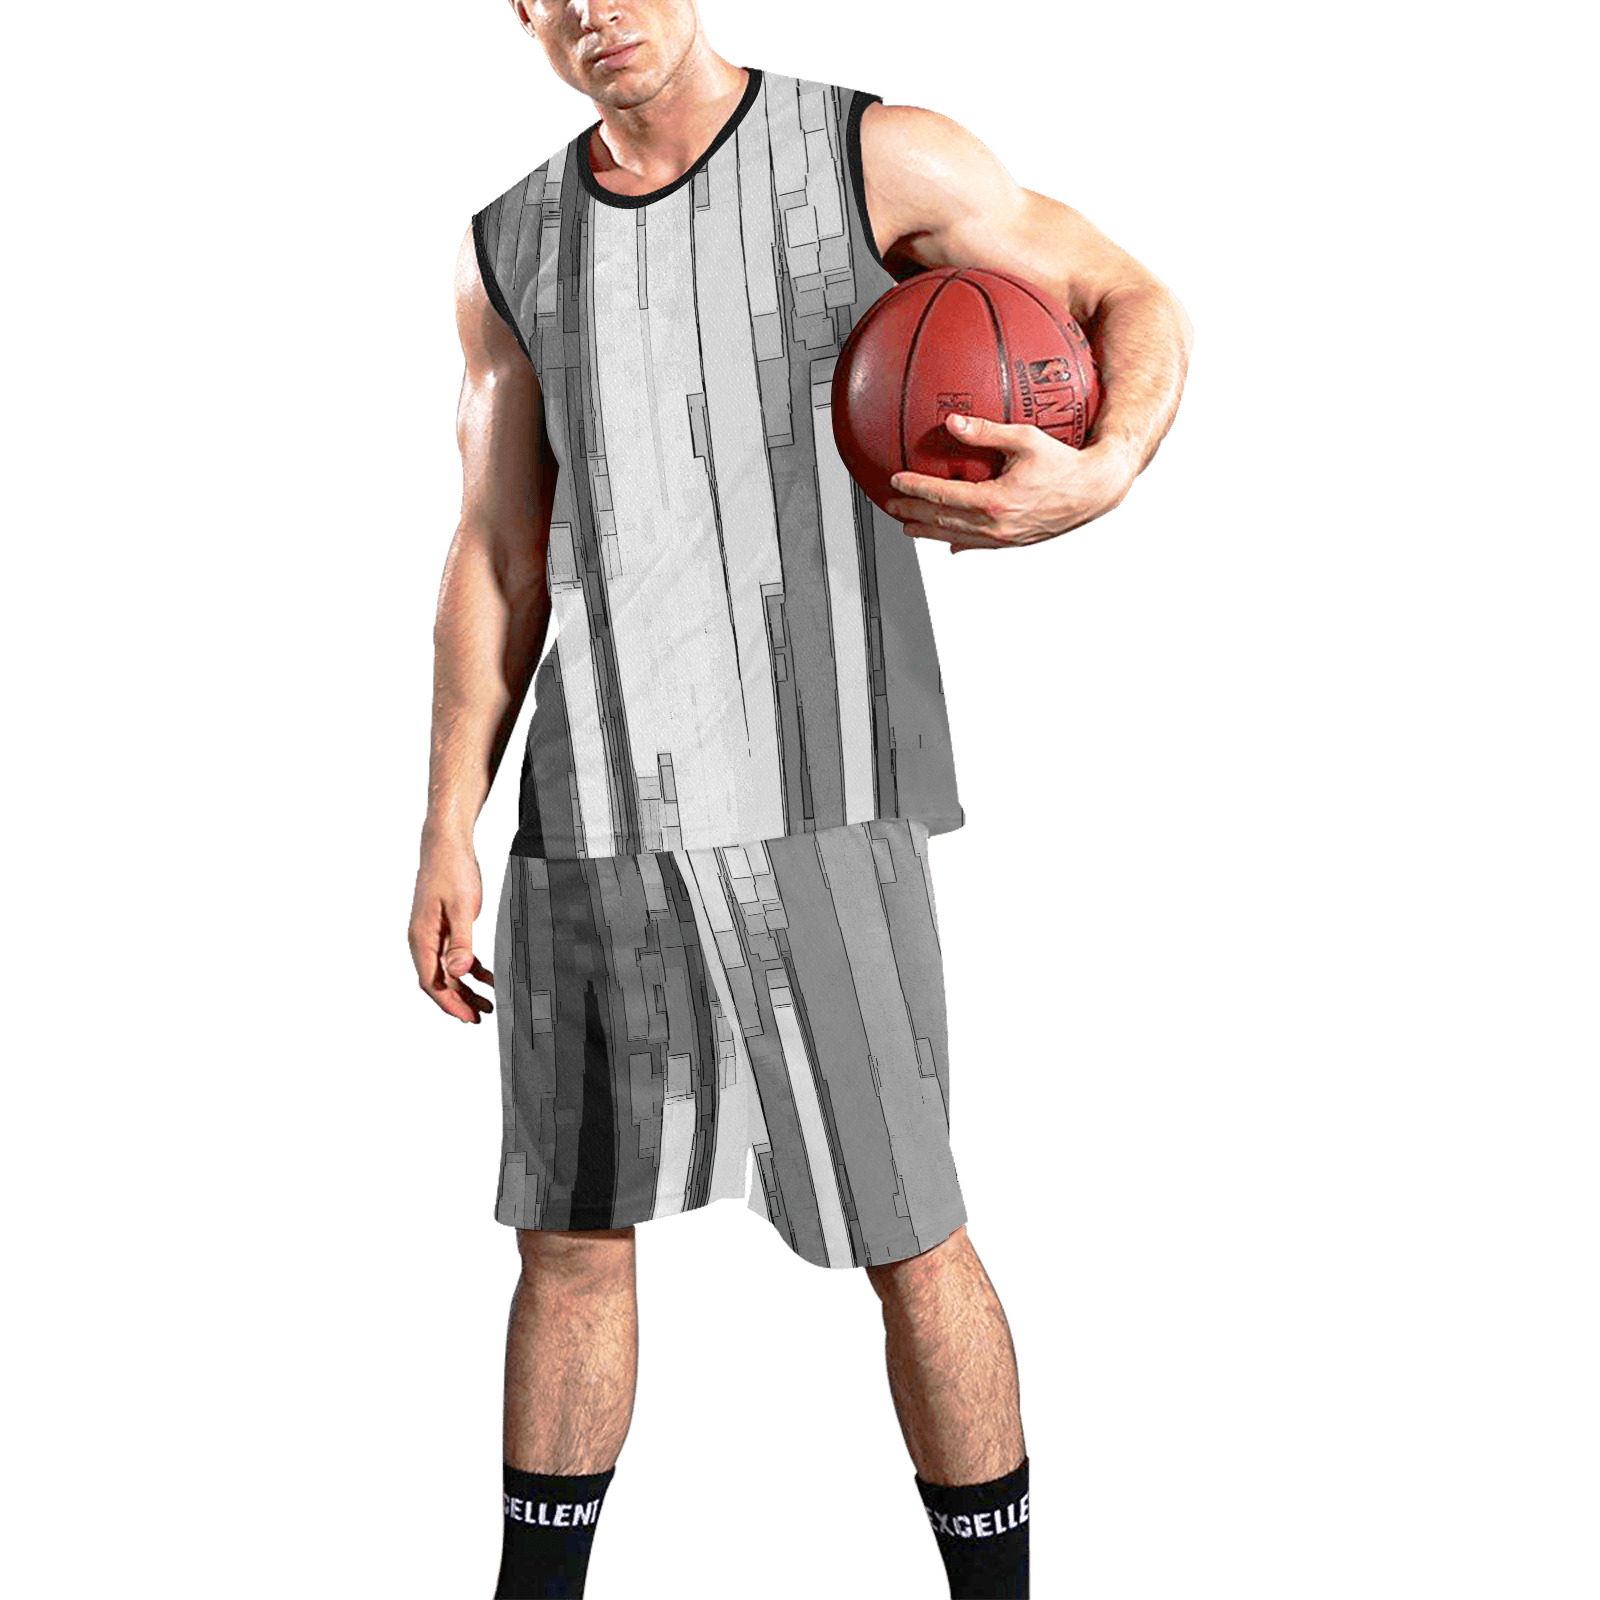 Greyscale Abstract B&W Art All Over Print Basketball Uniform